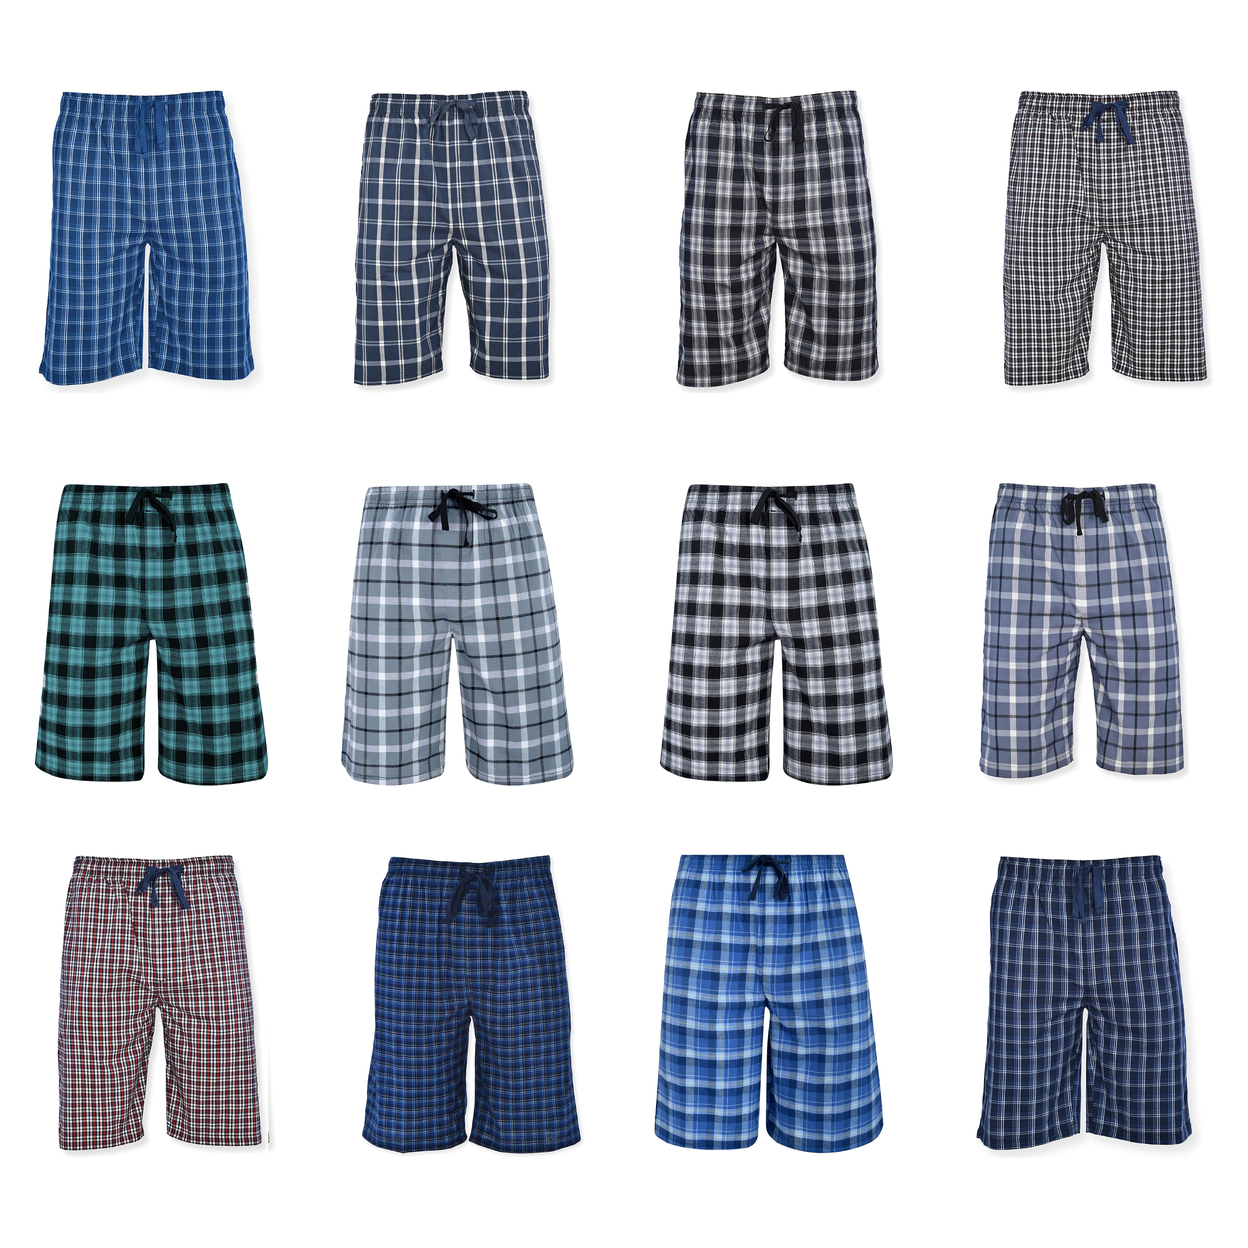 4-Pack: Men's Ultra Soft Plaid Lounge Pajama Sleep Wear Shorts - Small